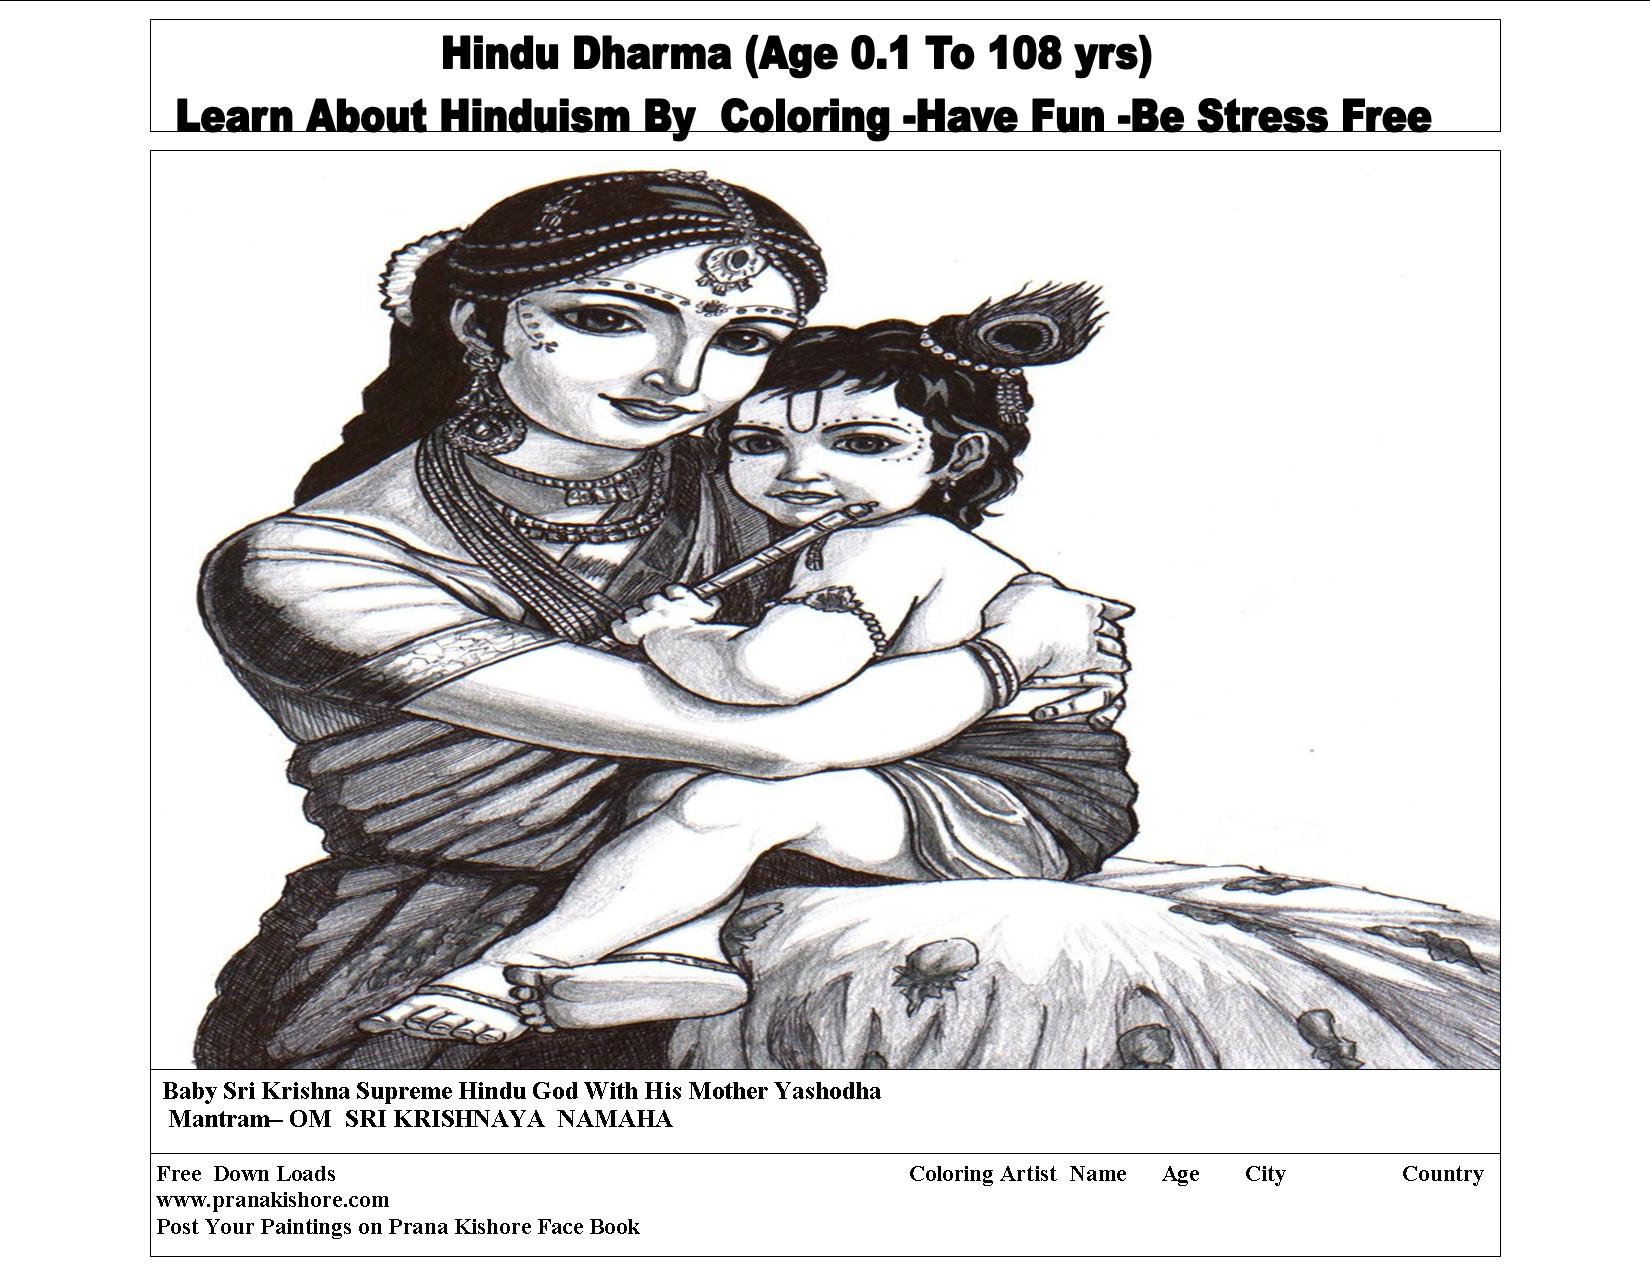 Hindu Dharma Coloring-Sri Krishna and Mother Yoshadha